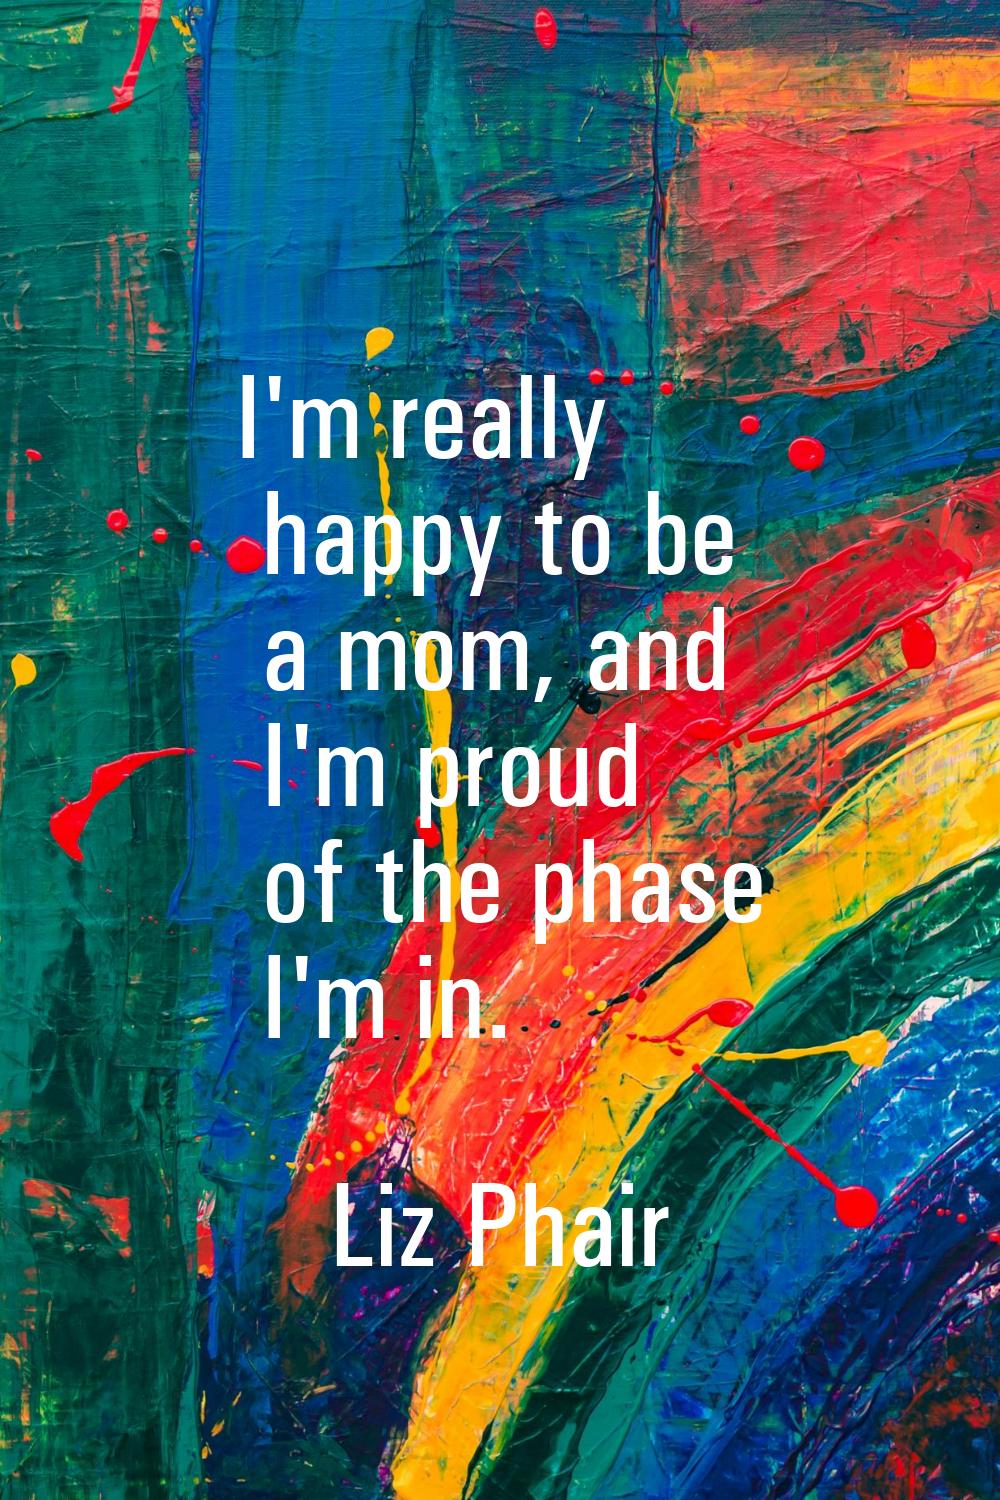 I'm really happy to be a mom, and I'm proud of the phase I'm in.